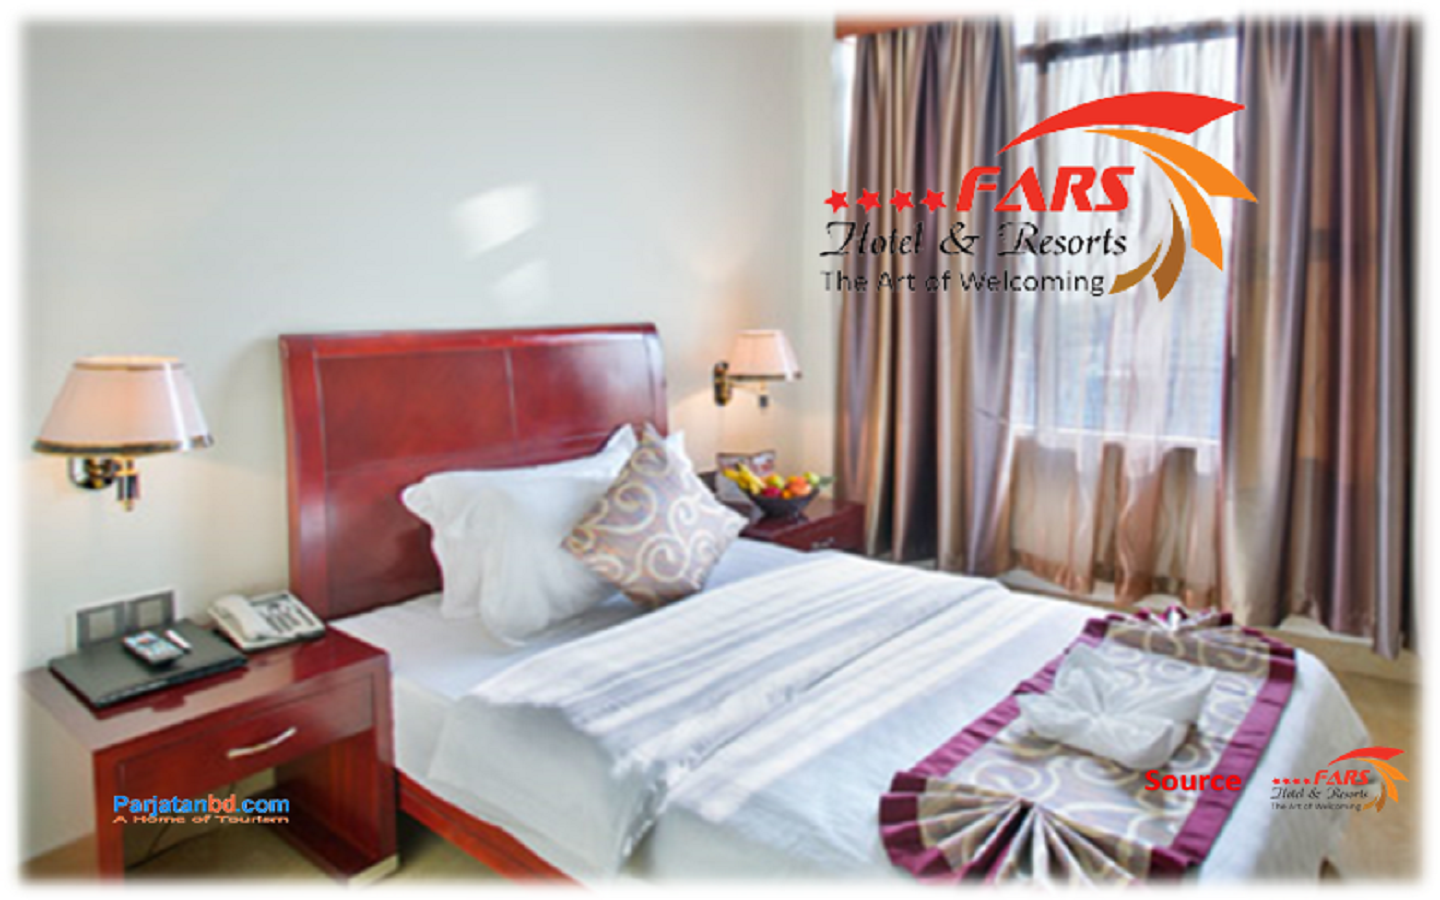 Room Premier Single -1, FARS Hotel & Resorts, Bijonagar